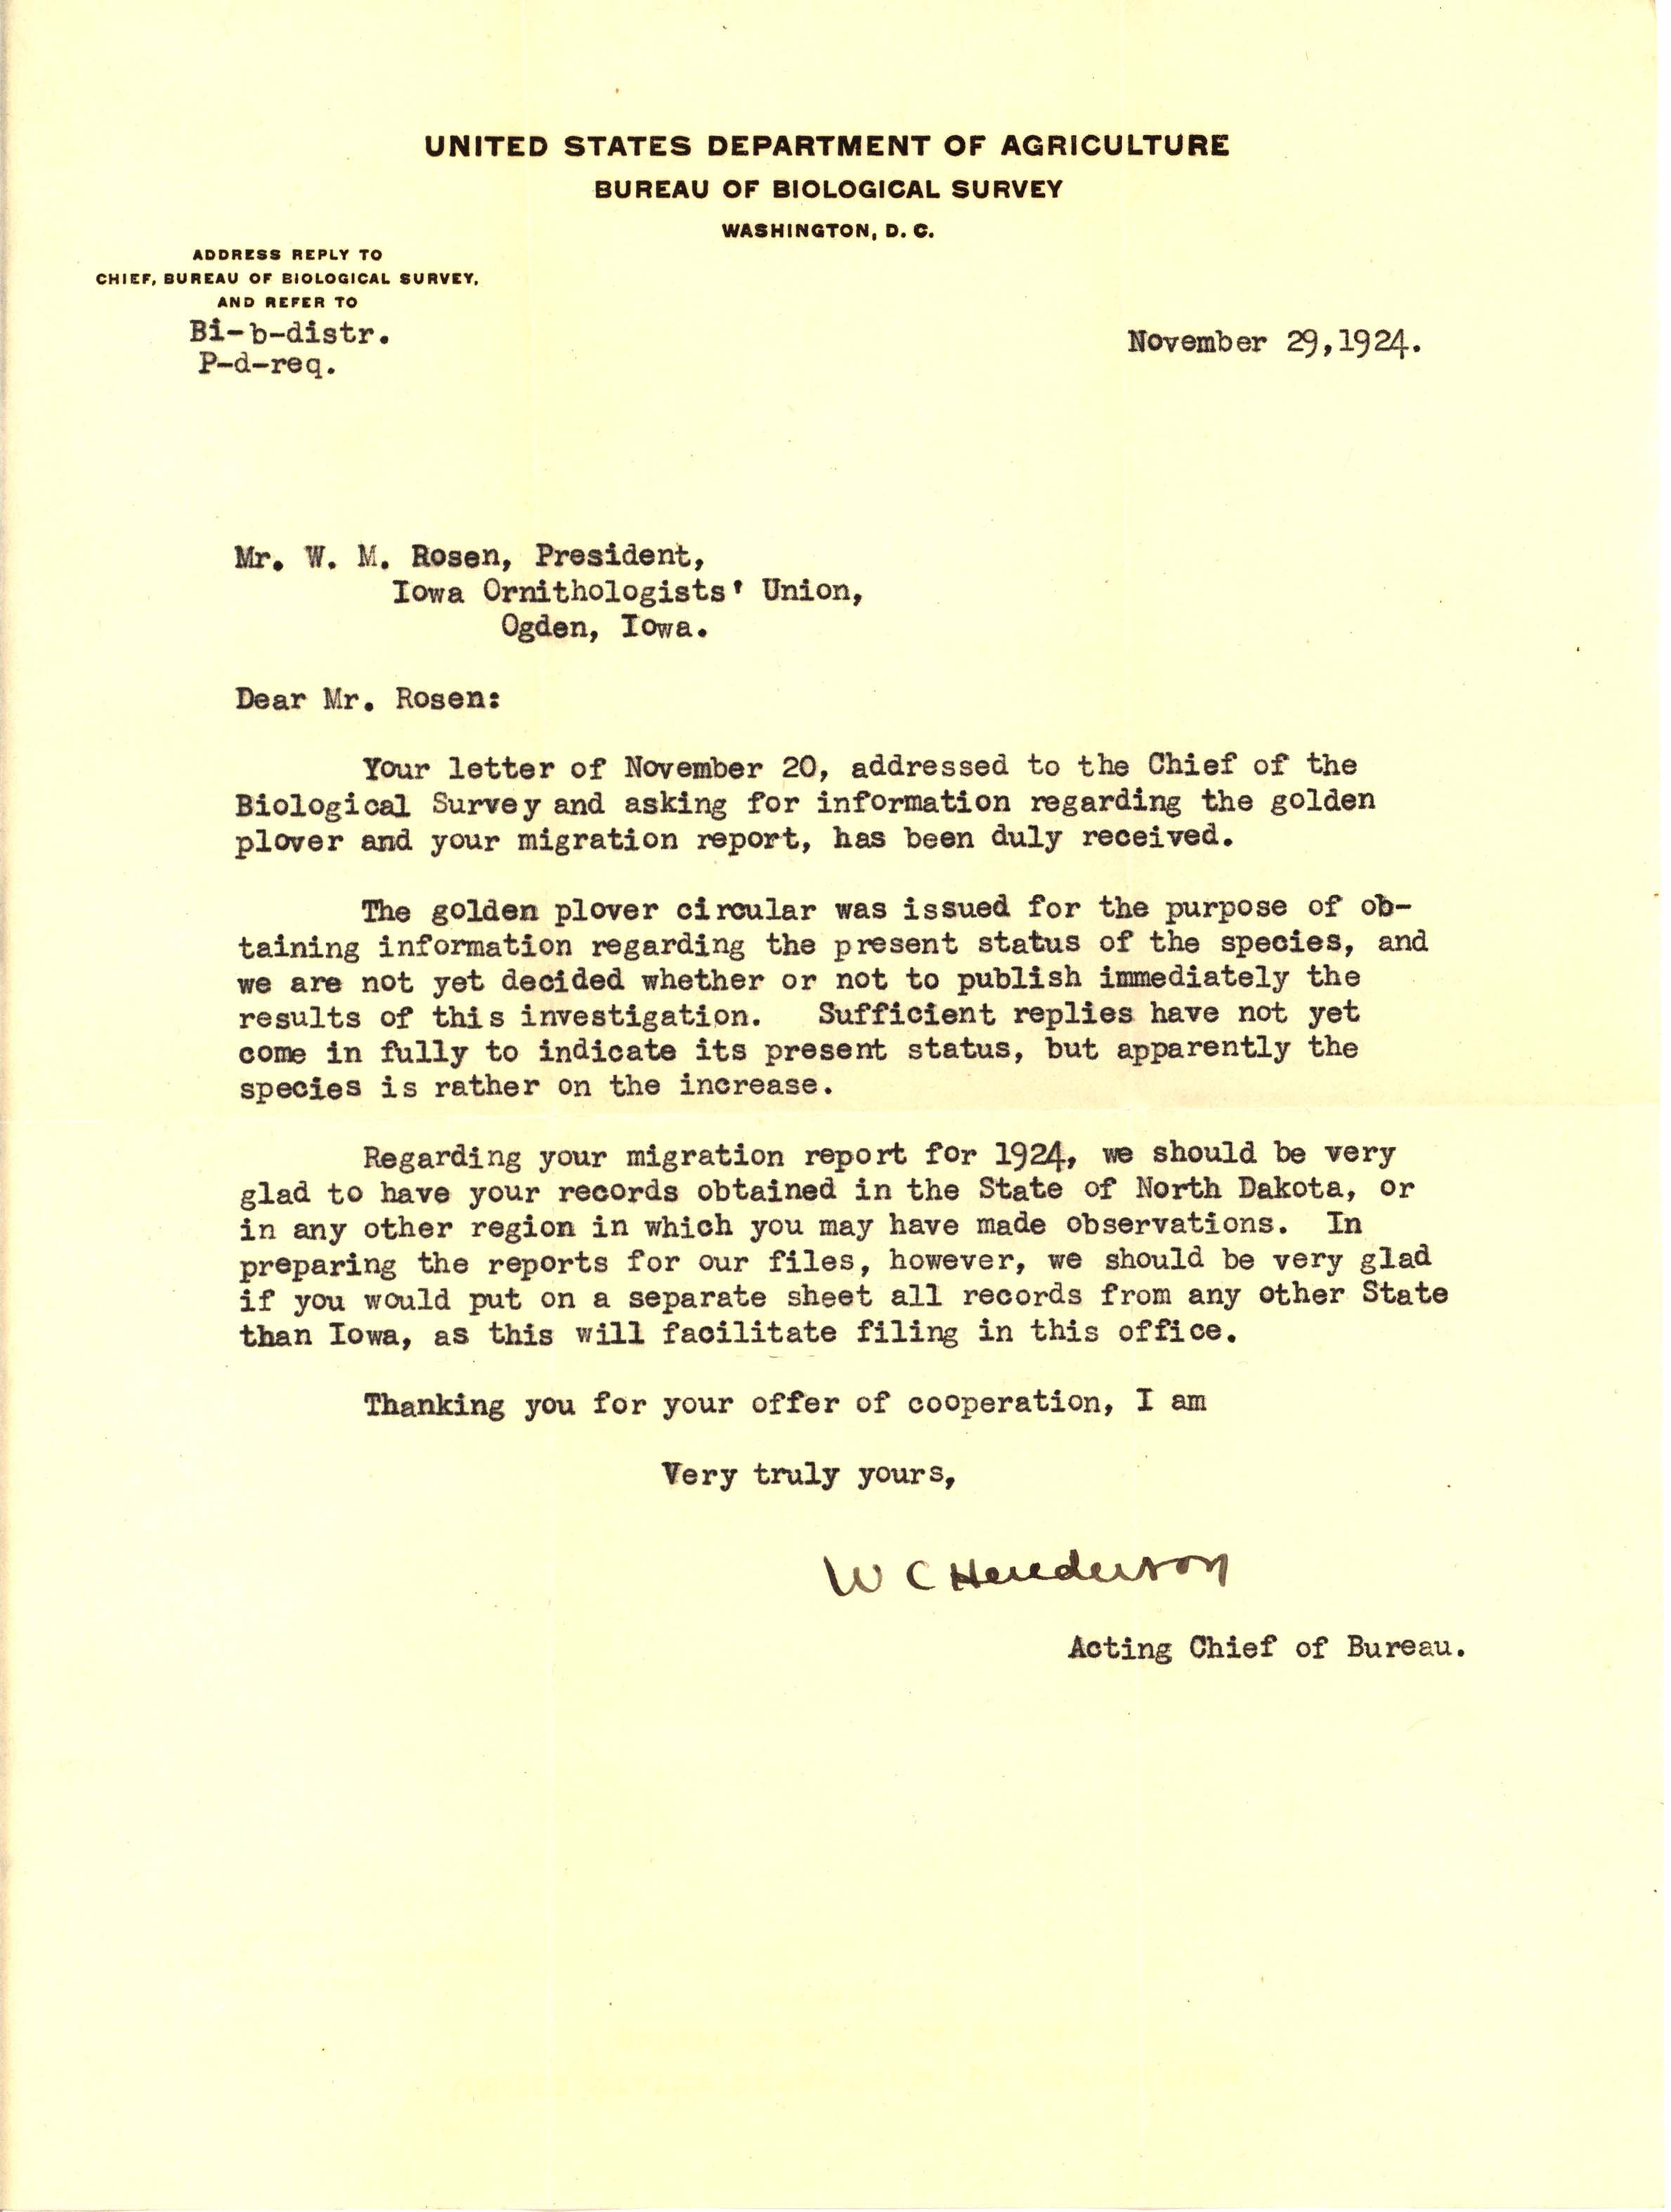 Walter C. Henderson letter to Walter Rosene regarding information on the Golden Plover and a 1924 migration report, November 29, 1924